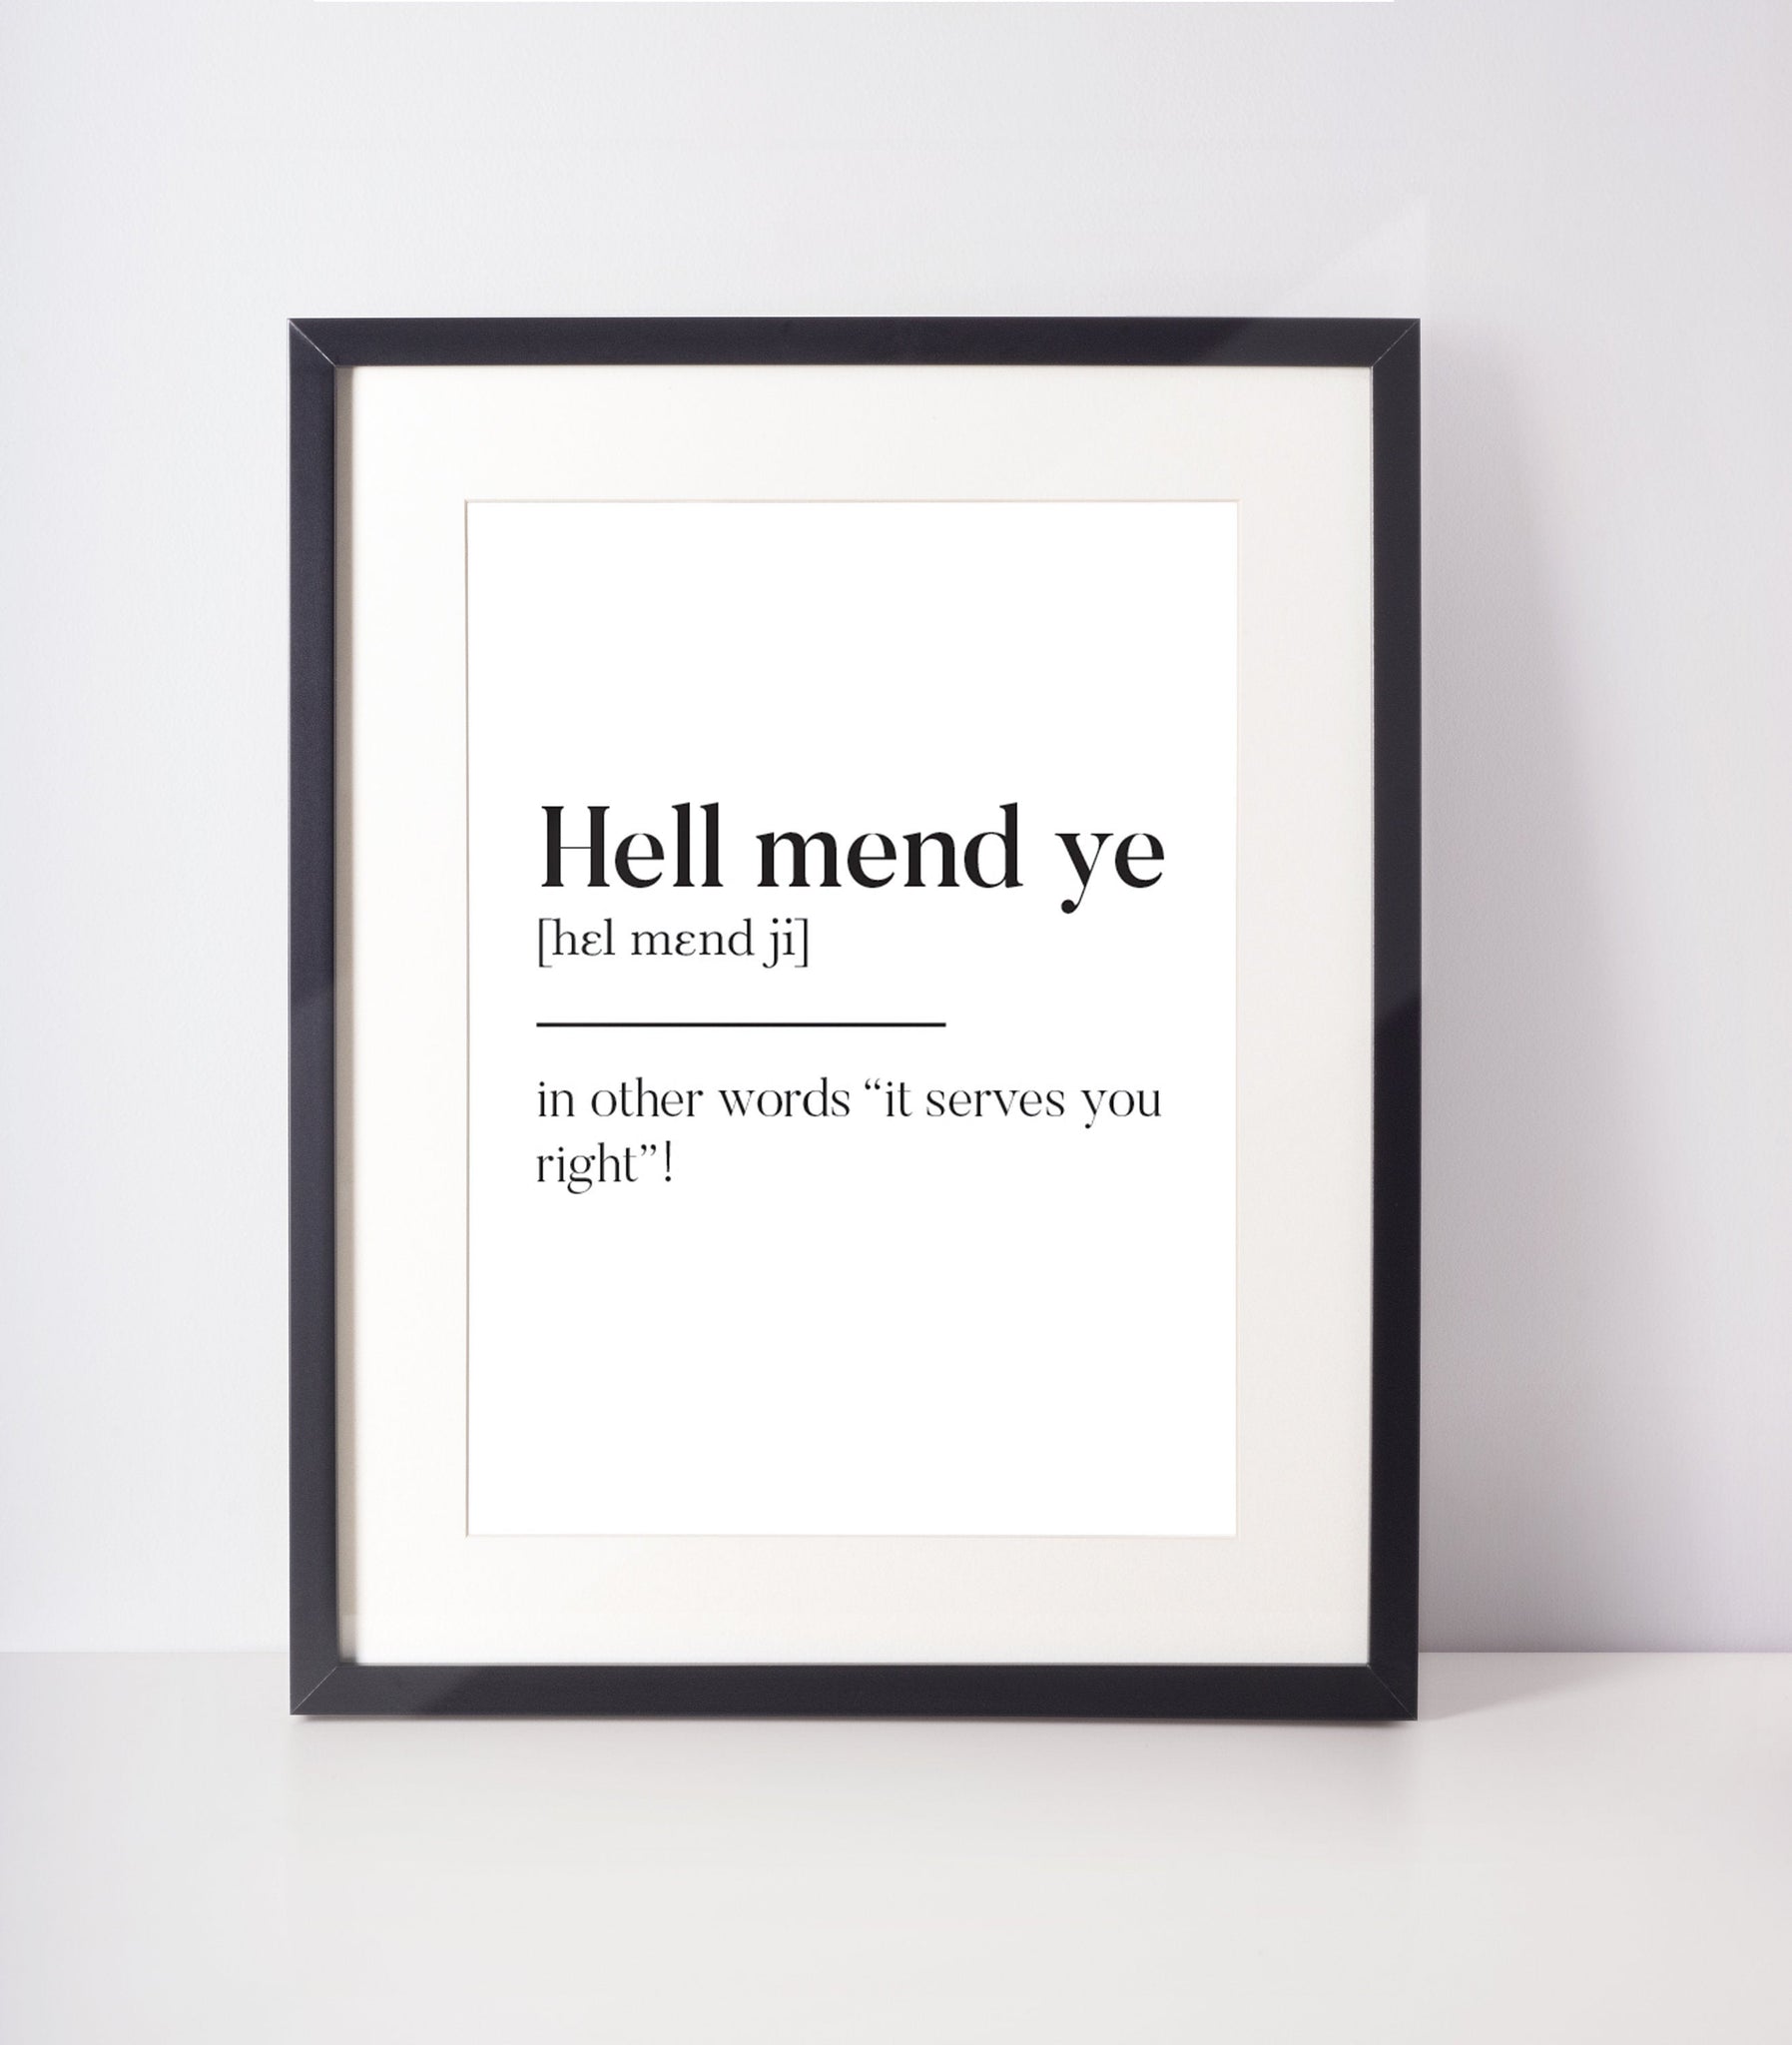 Hell mend ye Scottish Slang Definition Unframed Print